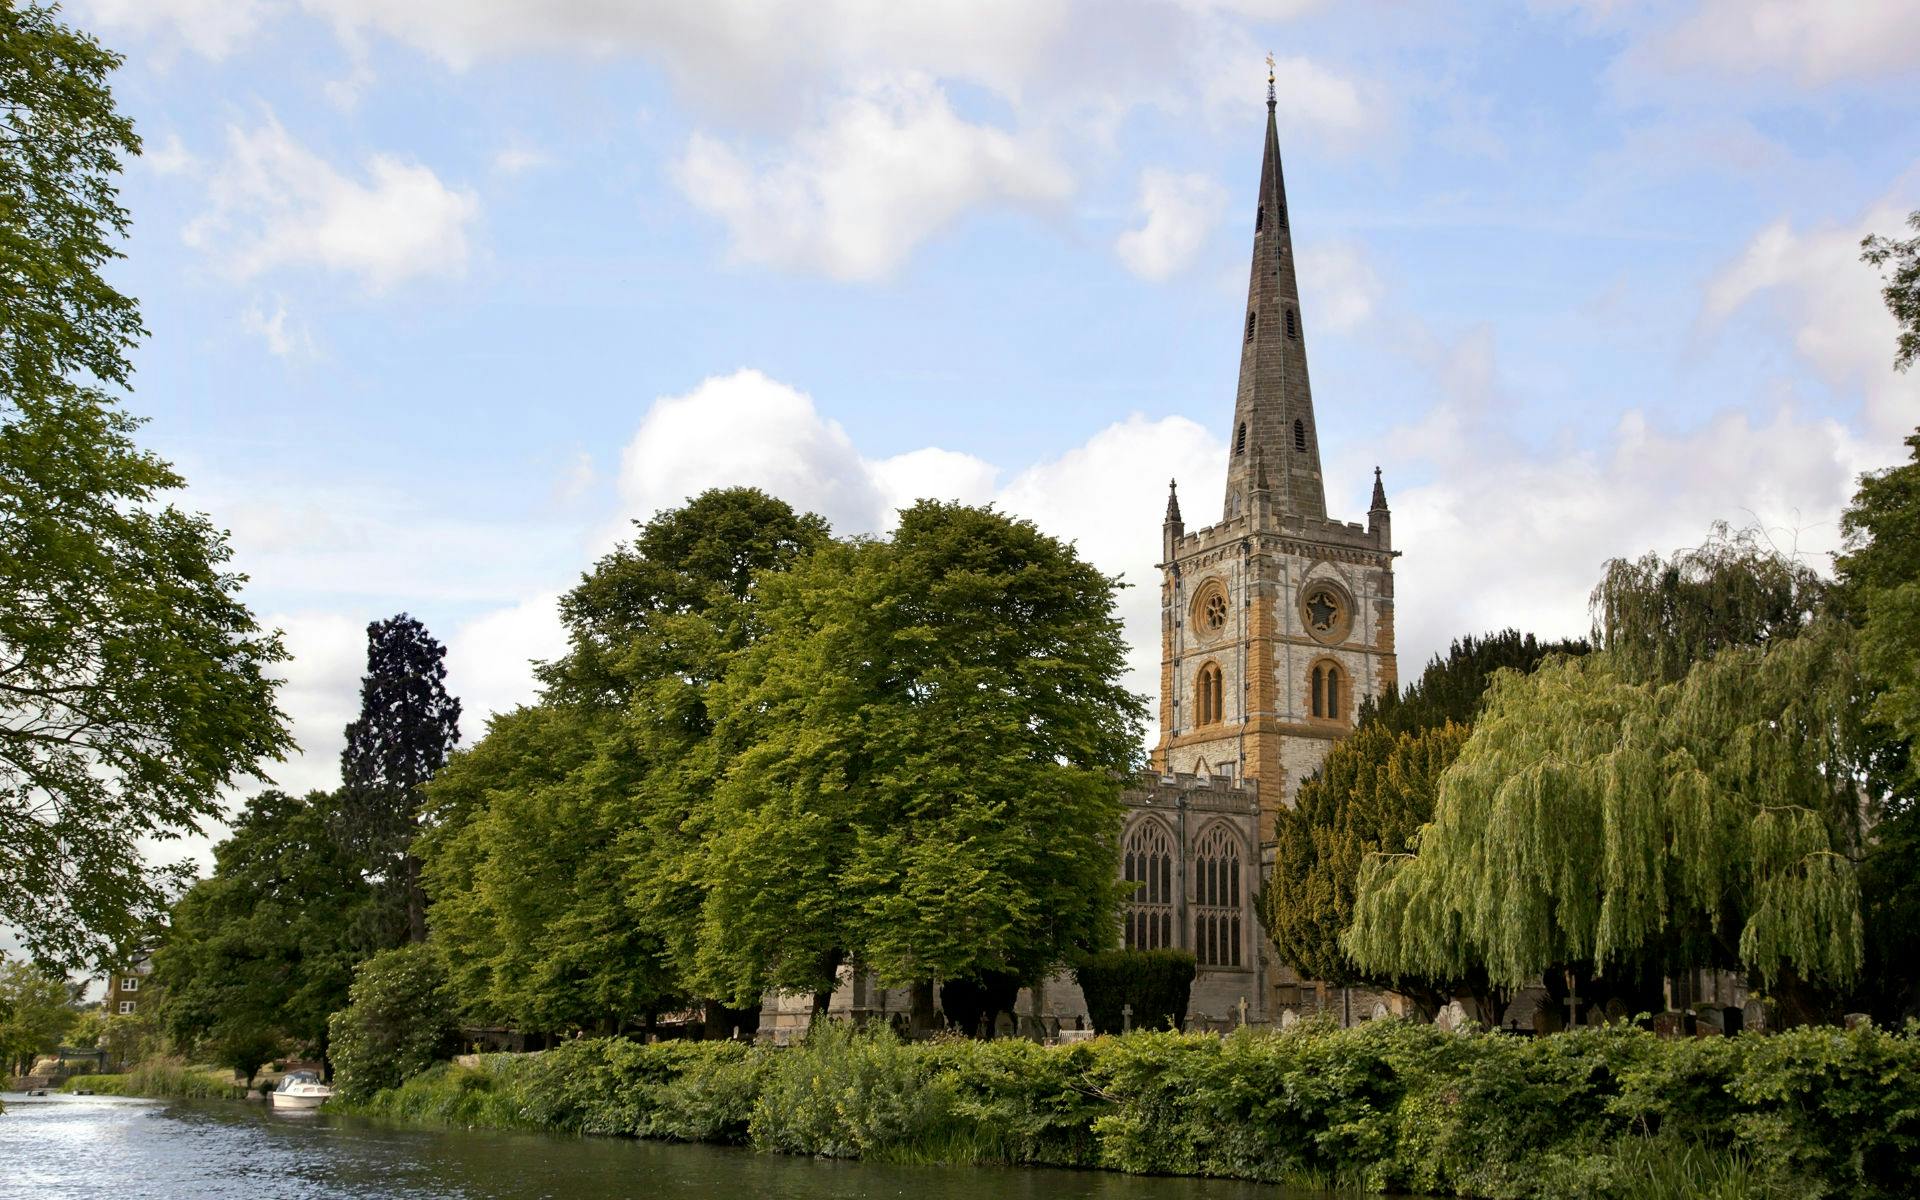 Oxford, Stratford-upon-Avon, Cotswolds en Warwick Castle met toegangskaarten